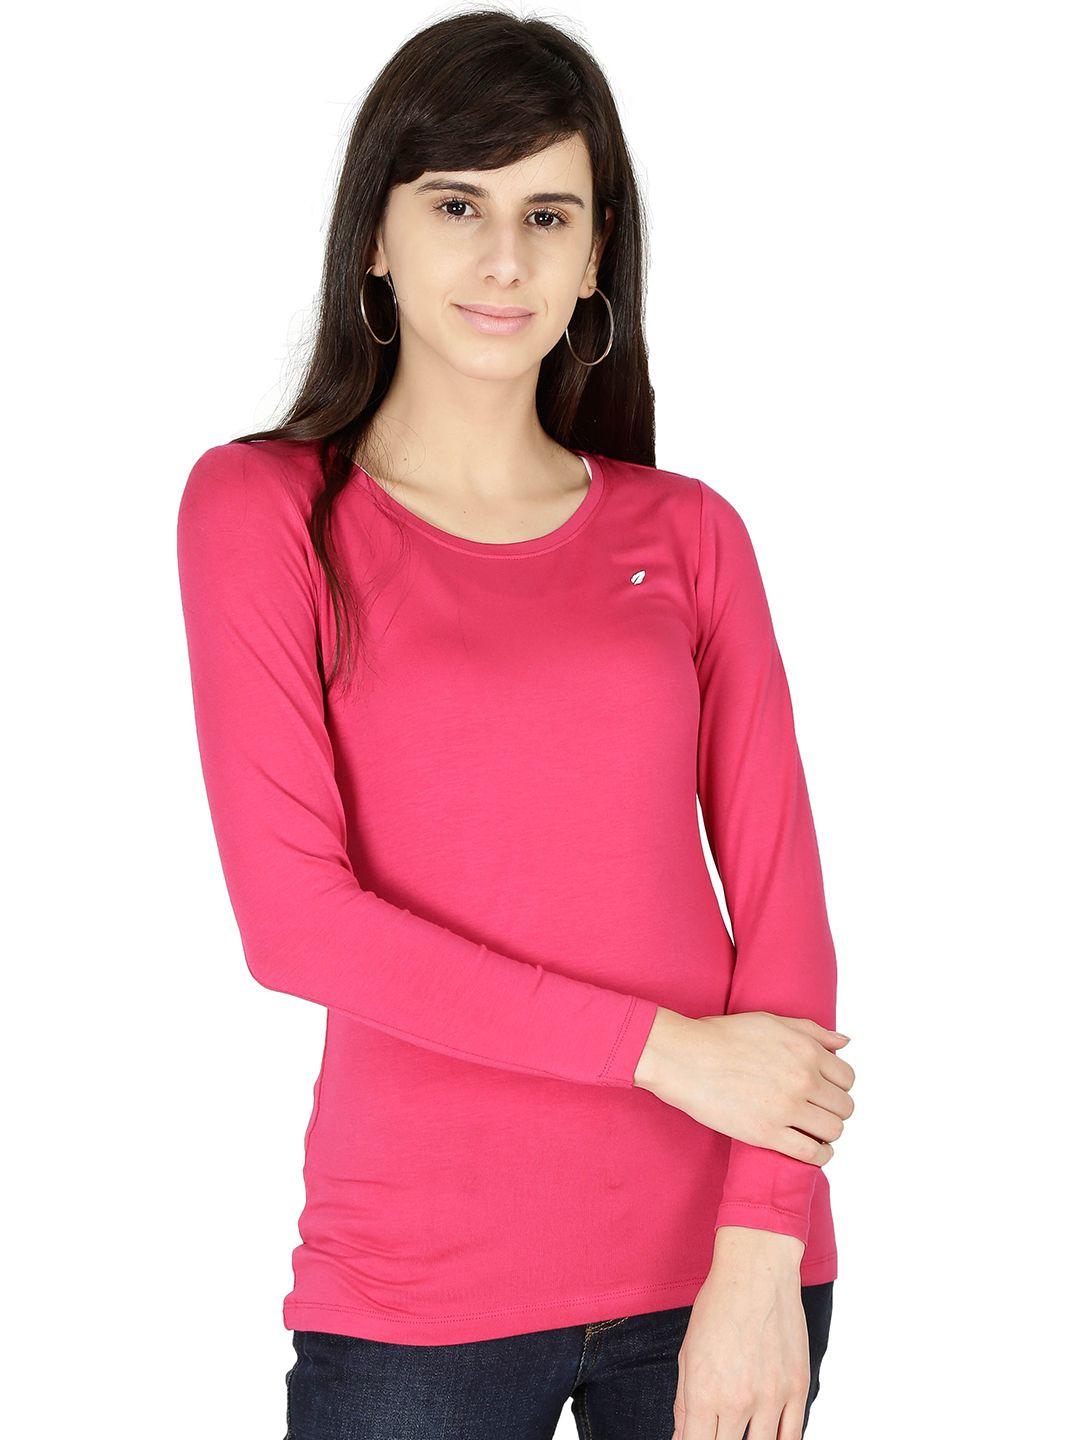 feather soft elite women pink stretchex running t-shirt